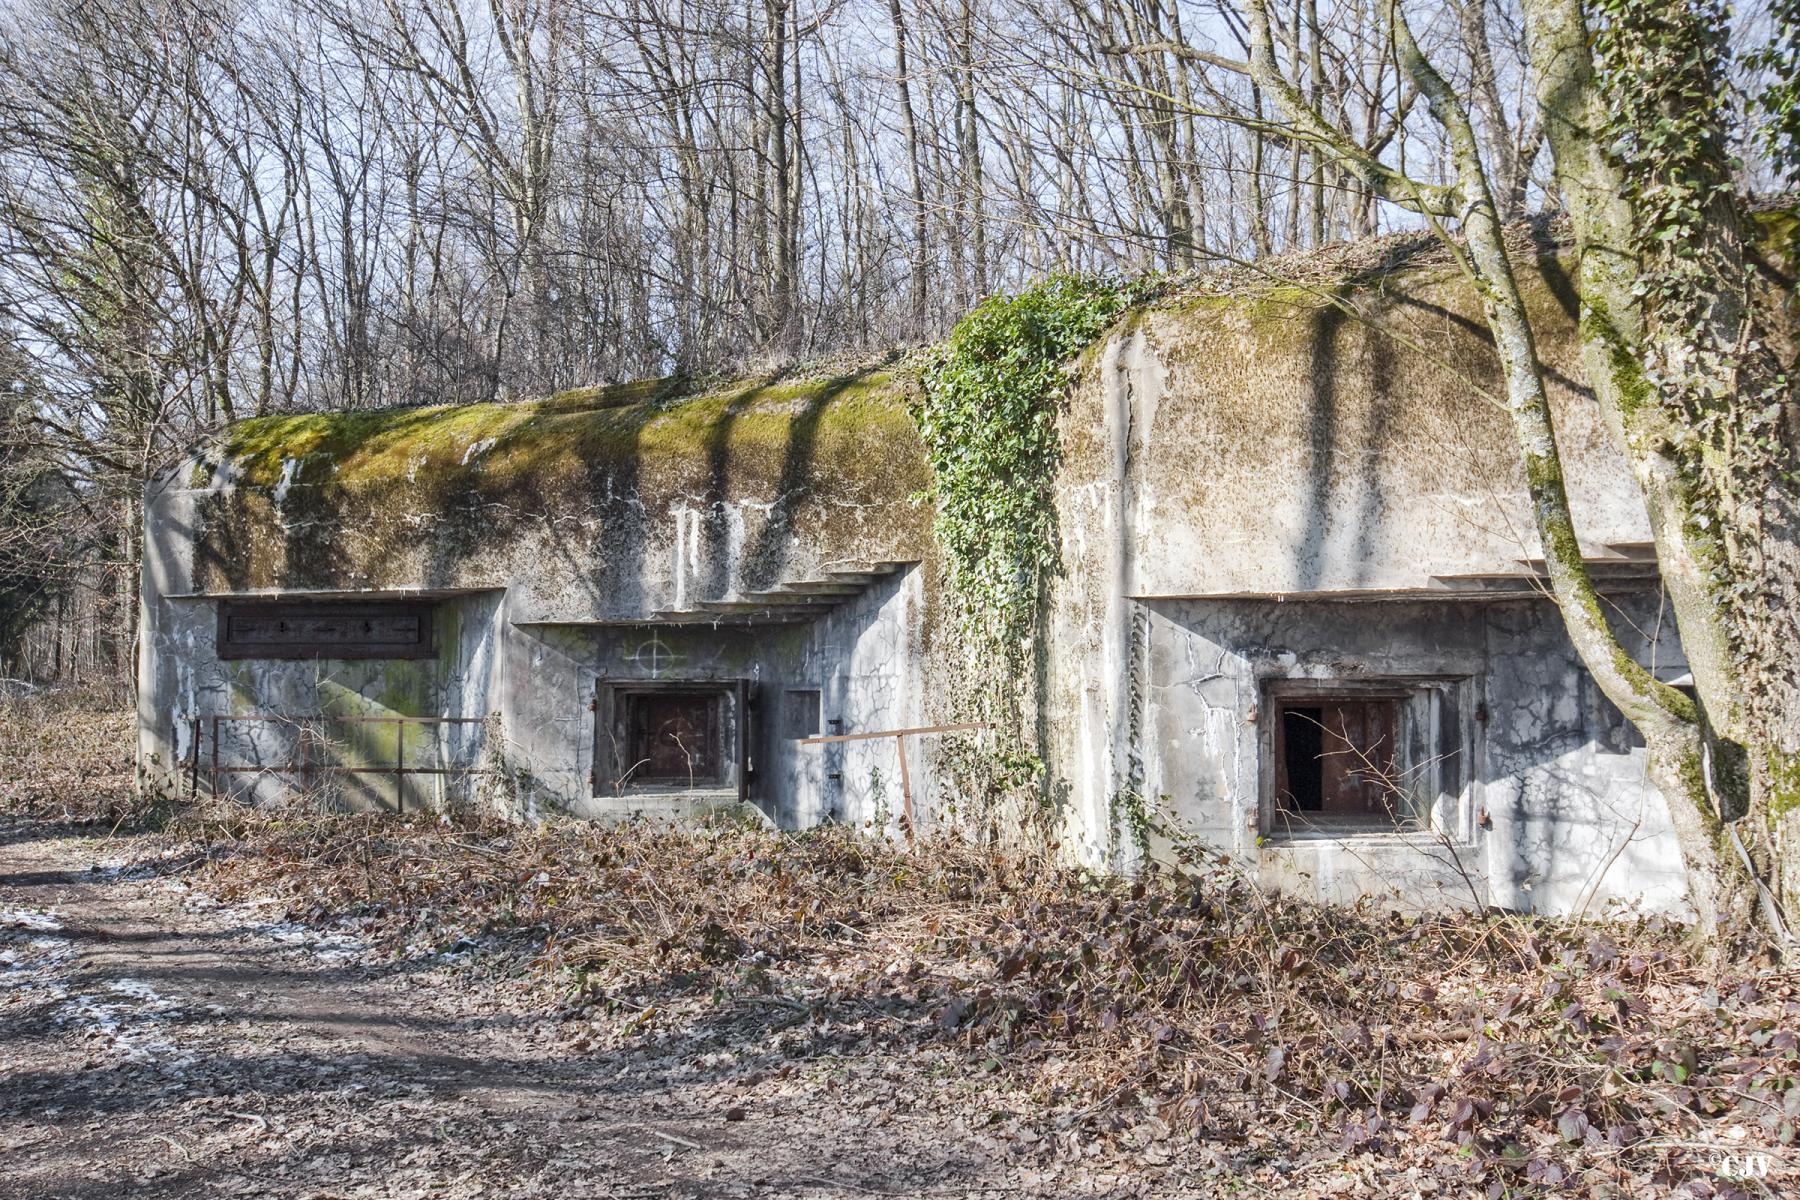 Ligne Maginot - BOIS D'OTTONVILLE - BCA1 - (Casemate d'artillerie) - 